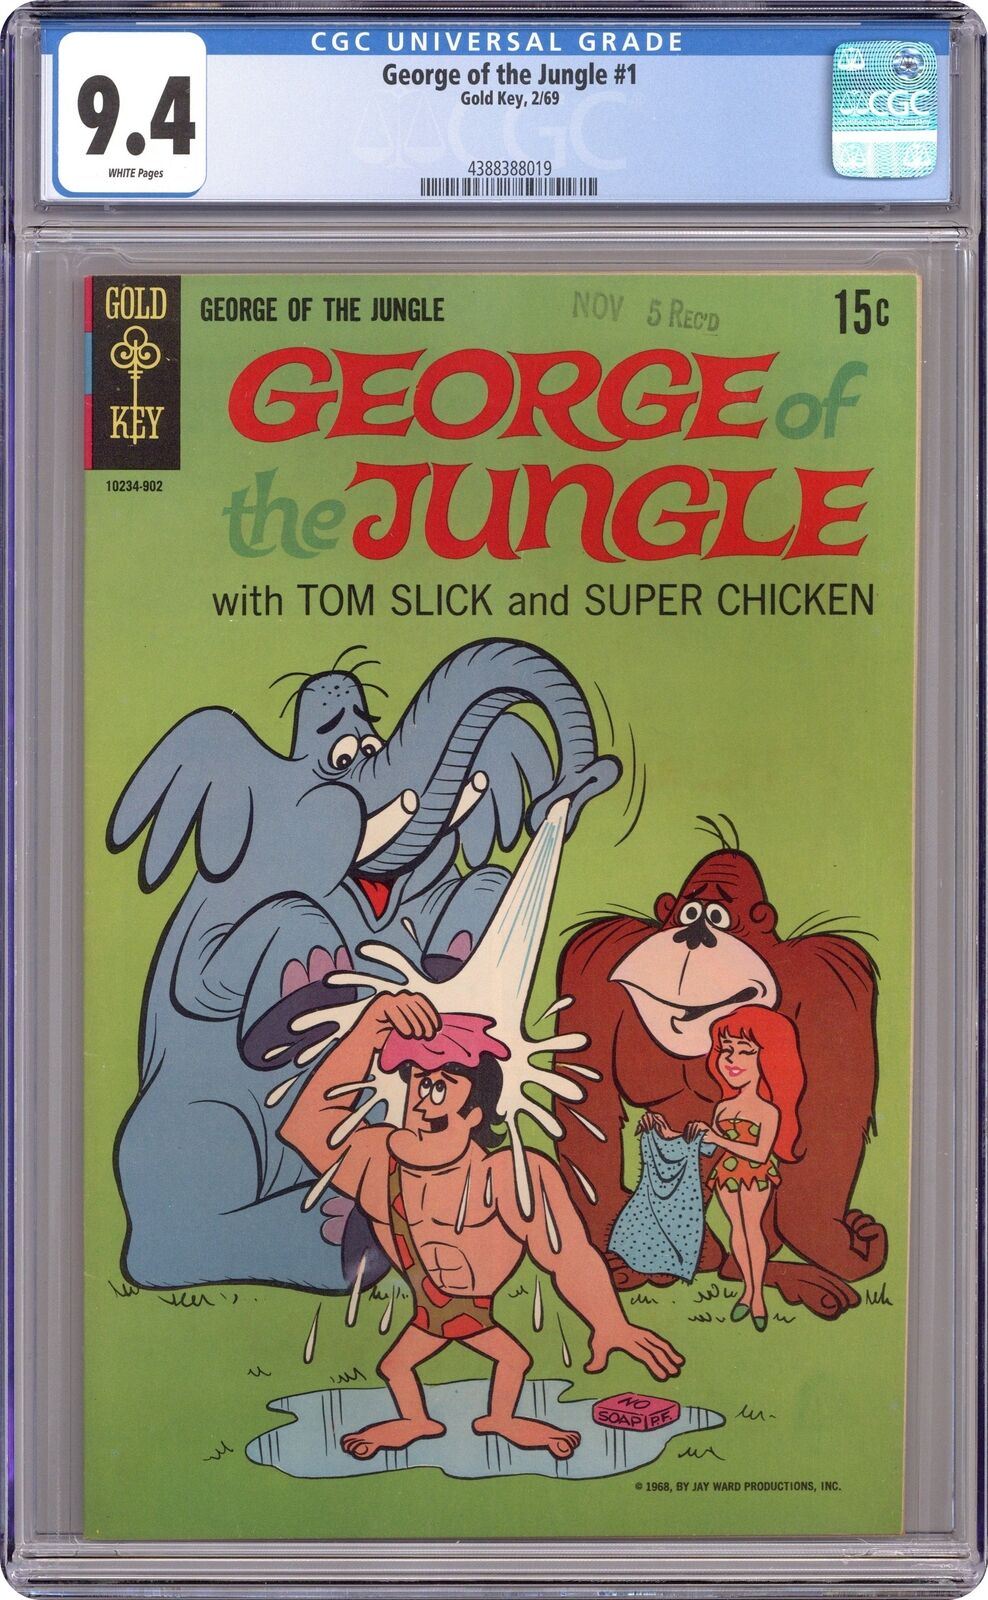 George of the Jungle #1 CGC 9.4 1969 4388388019